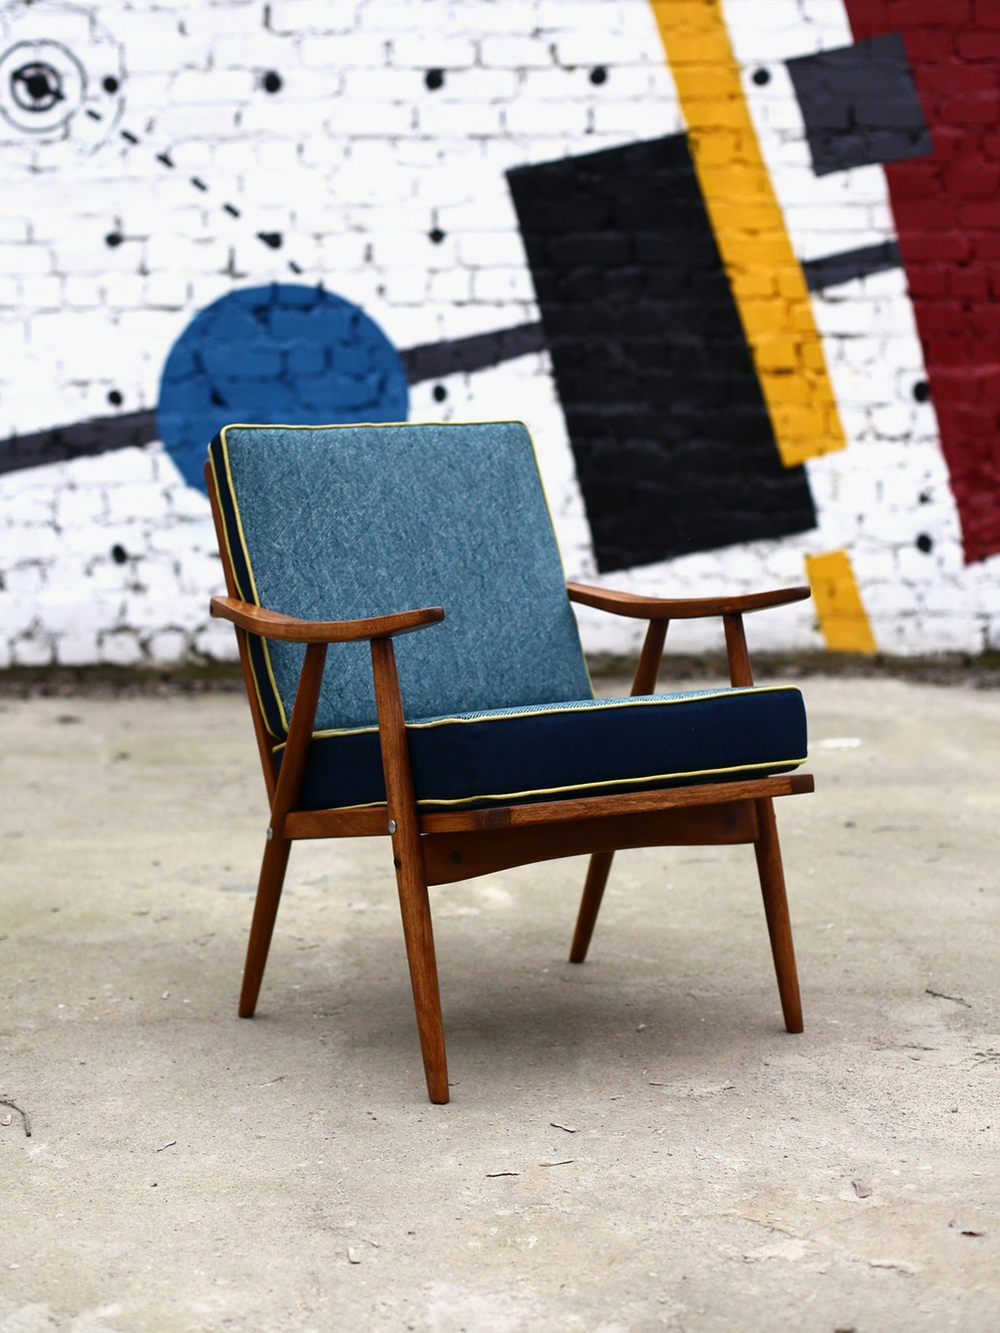 Чехословацкое кресло из 60-х